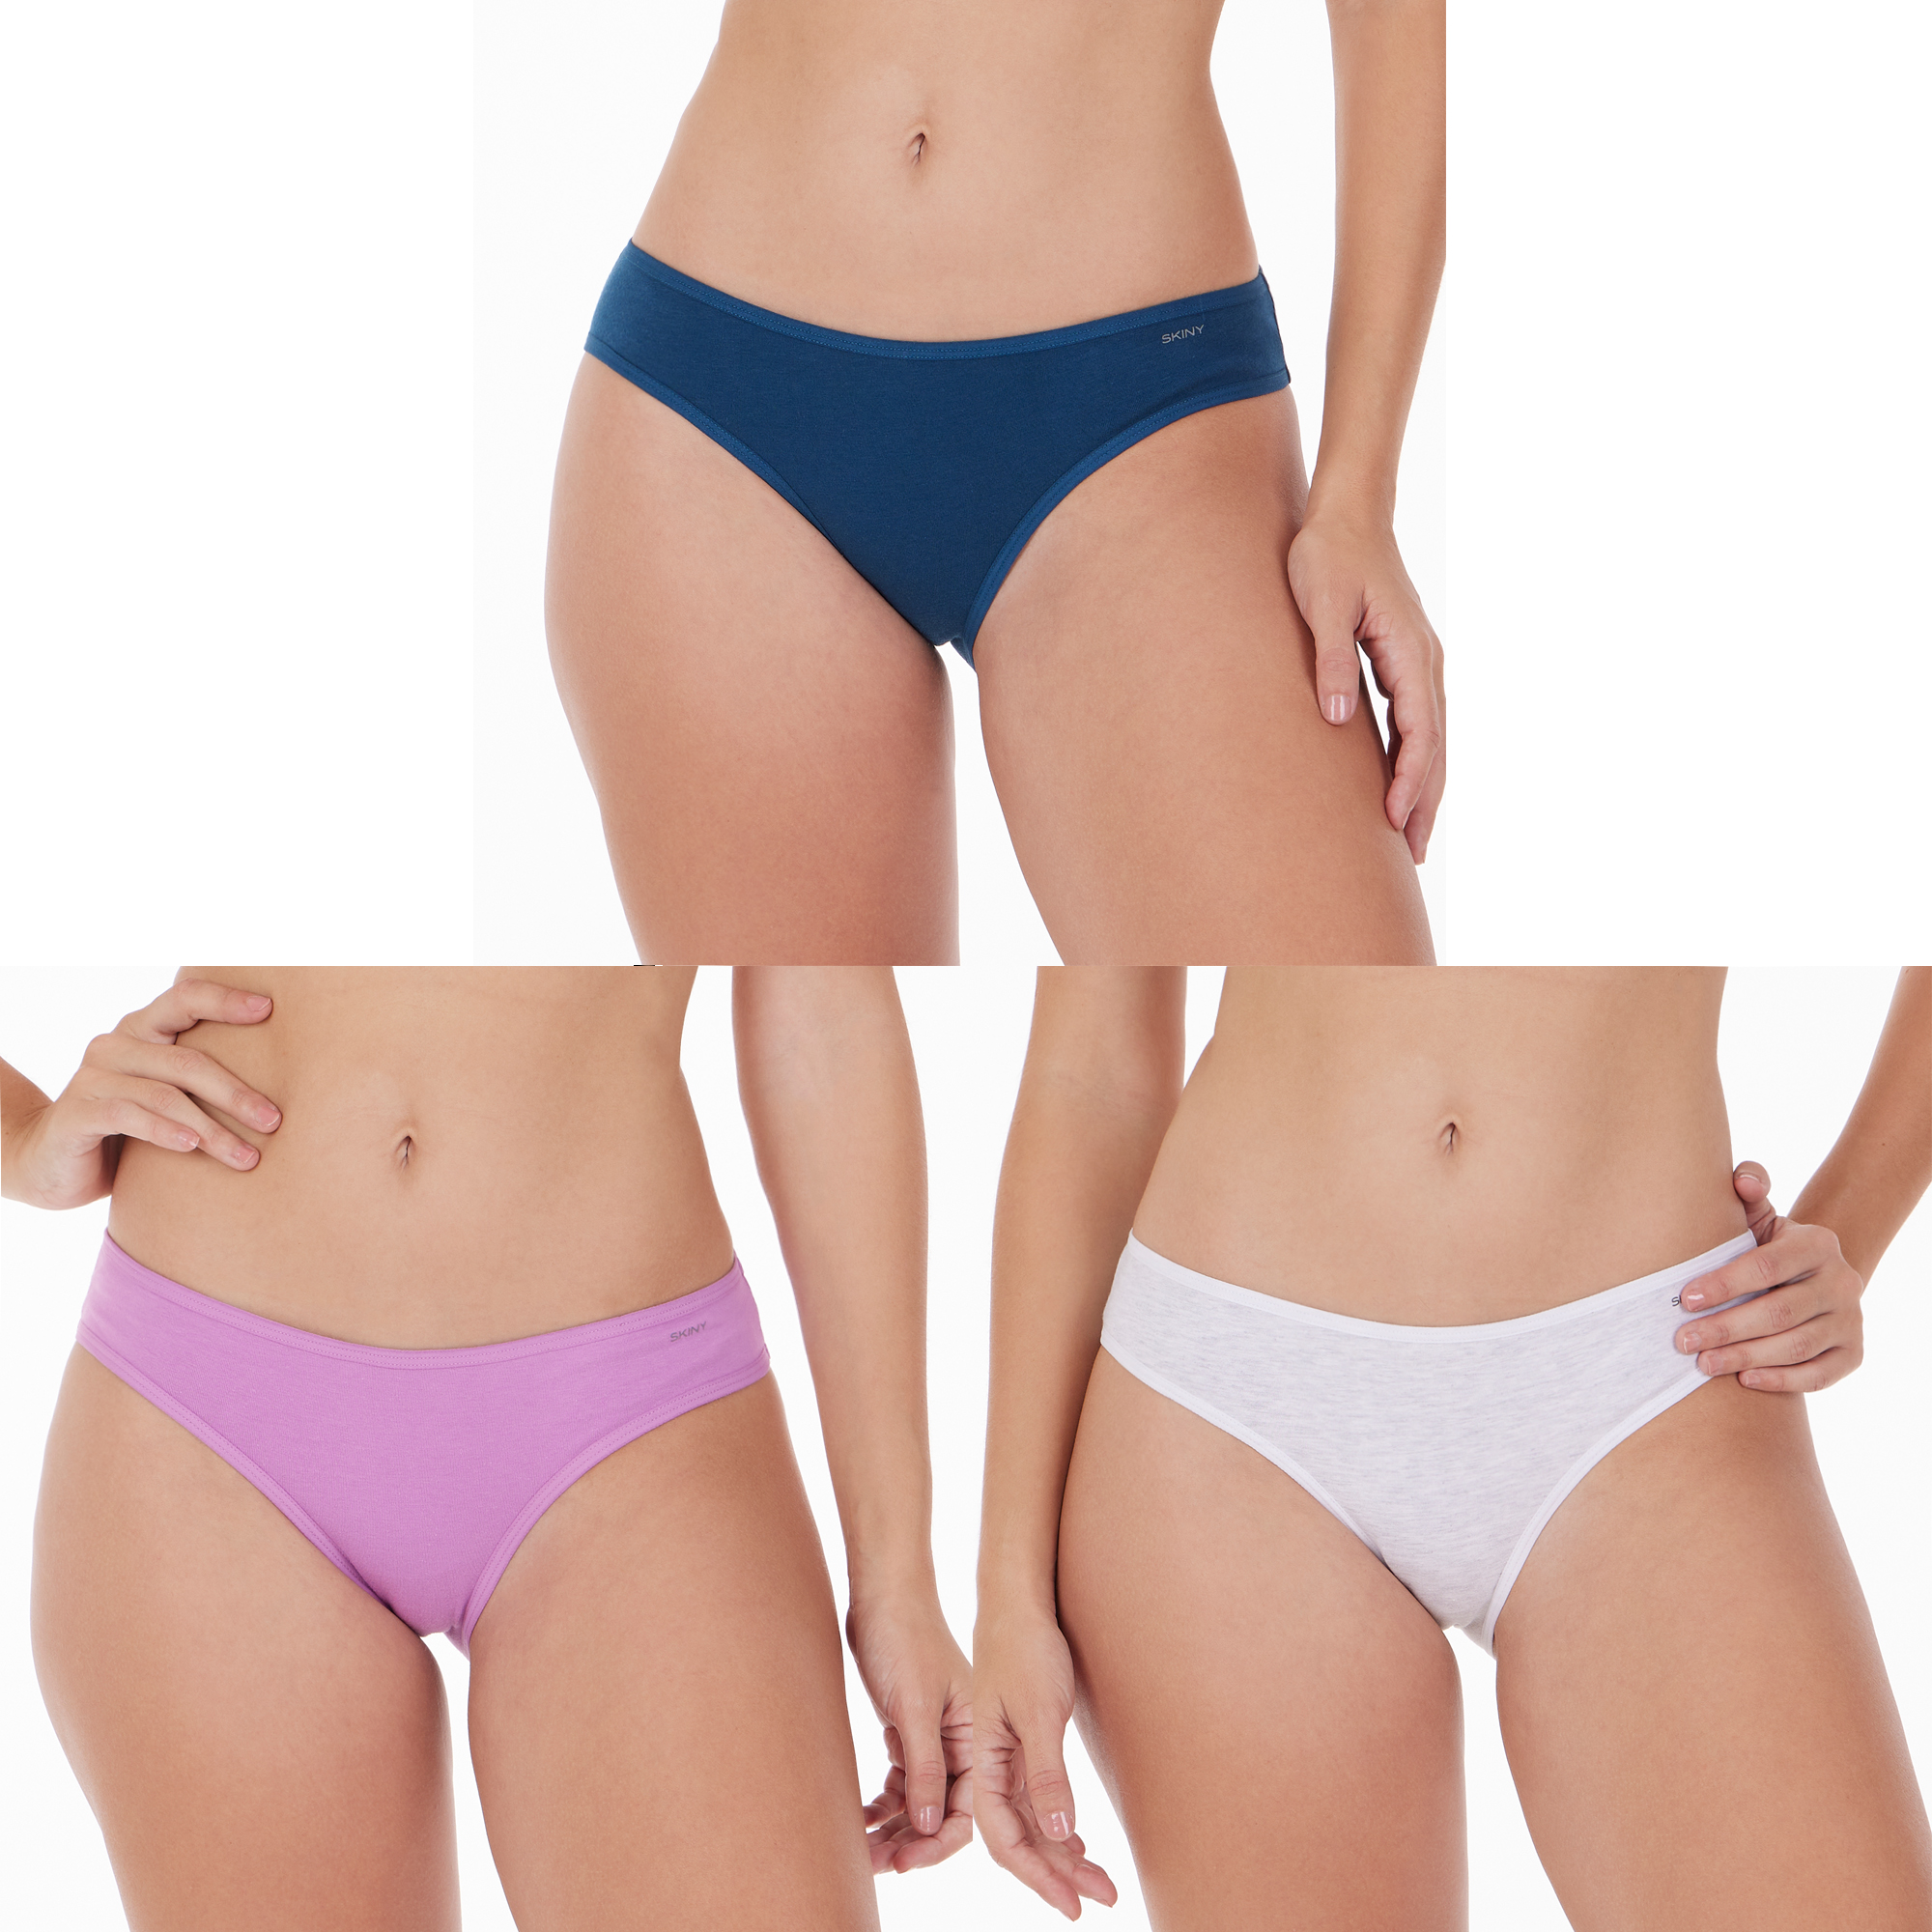 panty-bikini-algodon-mujer-3-piezas-multicolor-skiny-75389